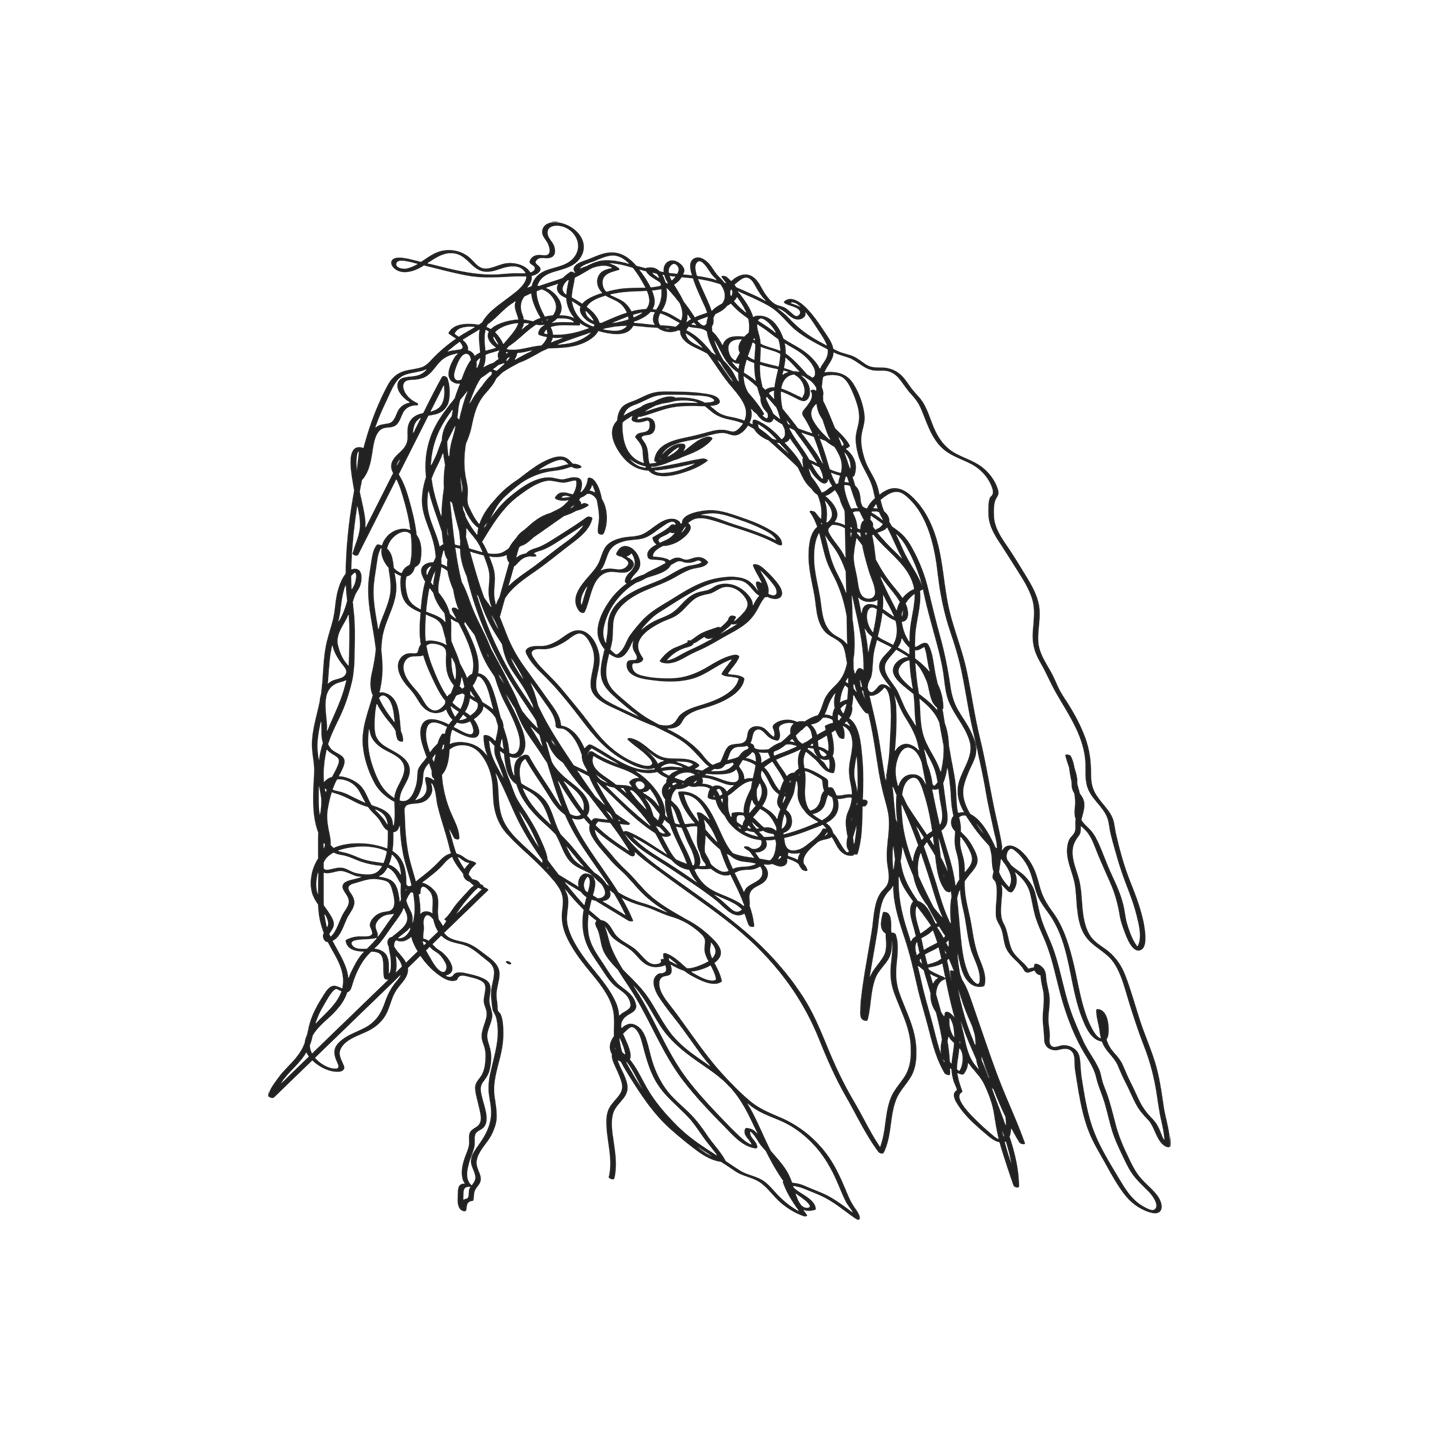 Illustrated Bob Marley